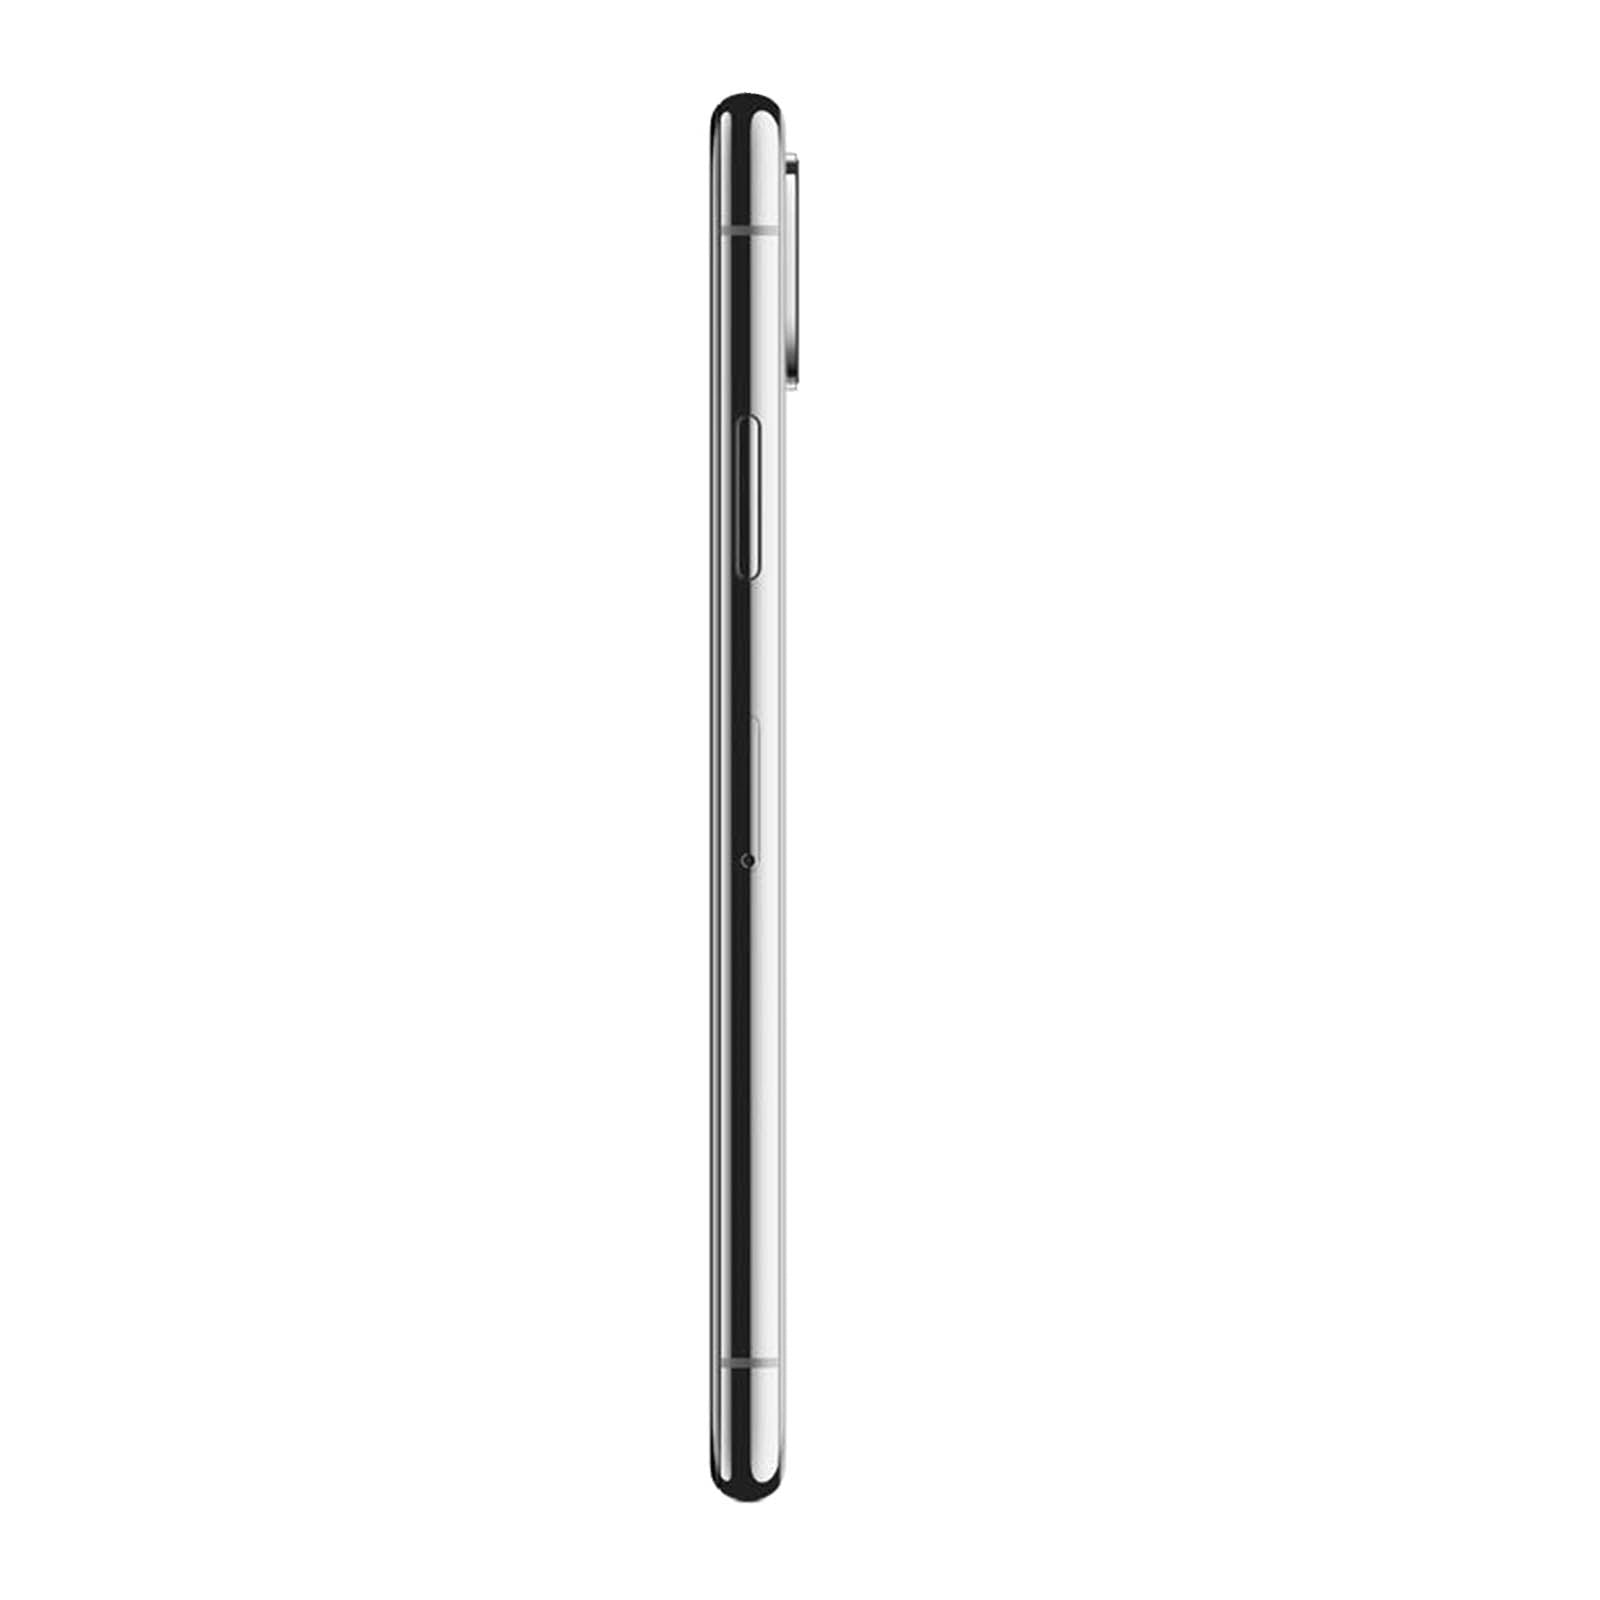 Apple iPhone XS Max 256GB Space Grey Pristine - Verizon